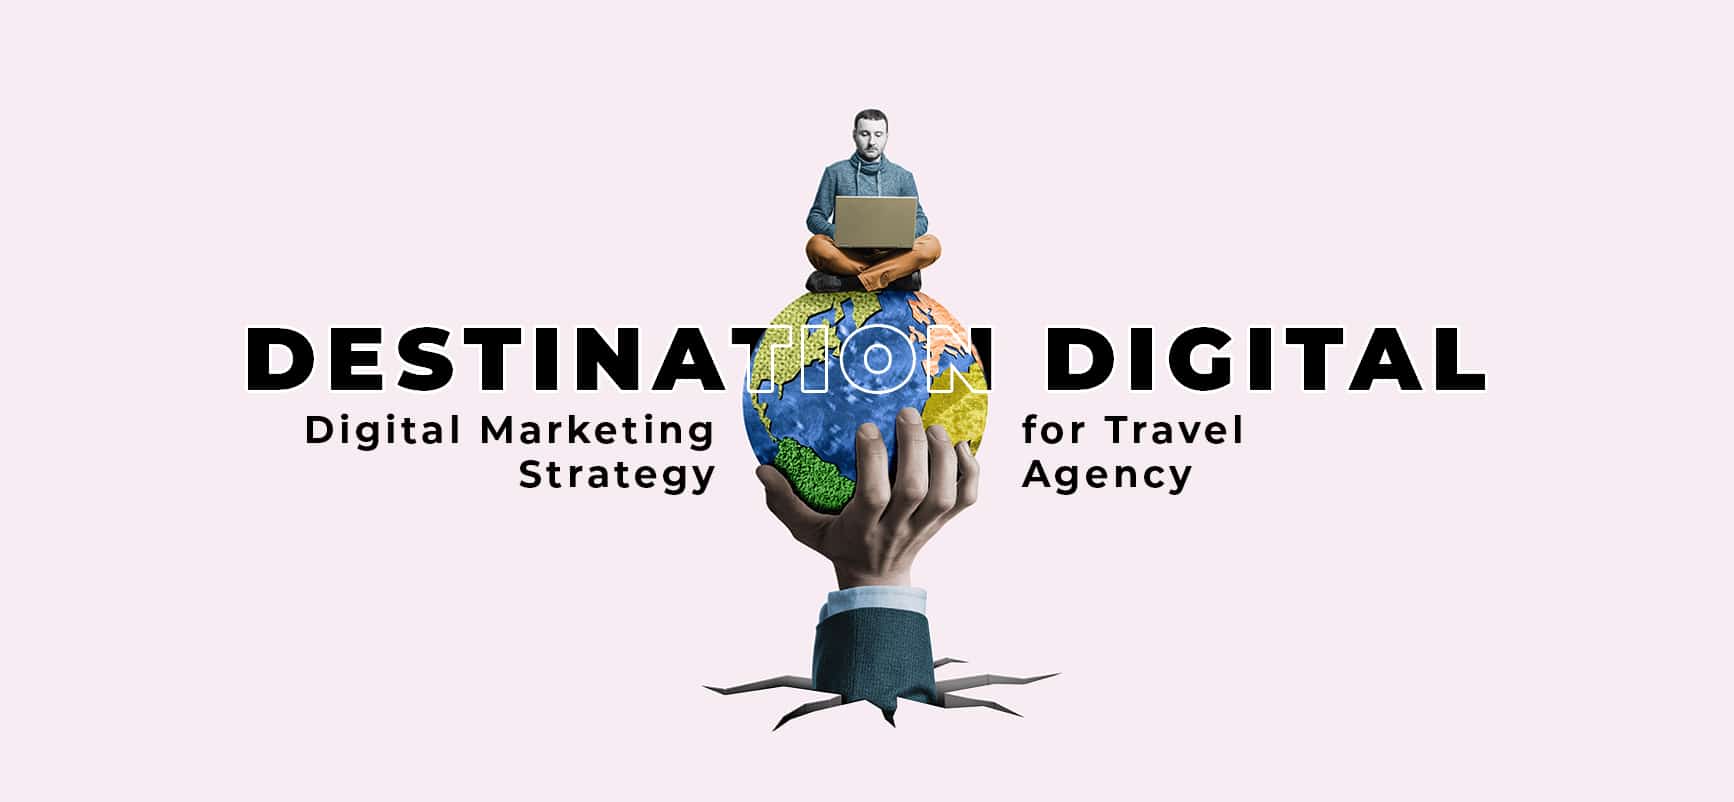 digital marketing strategy for travel agency